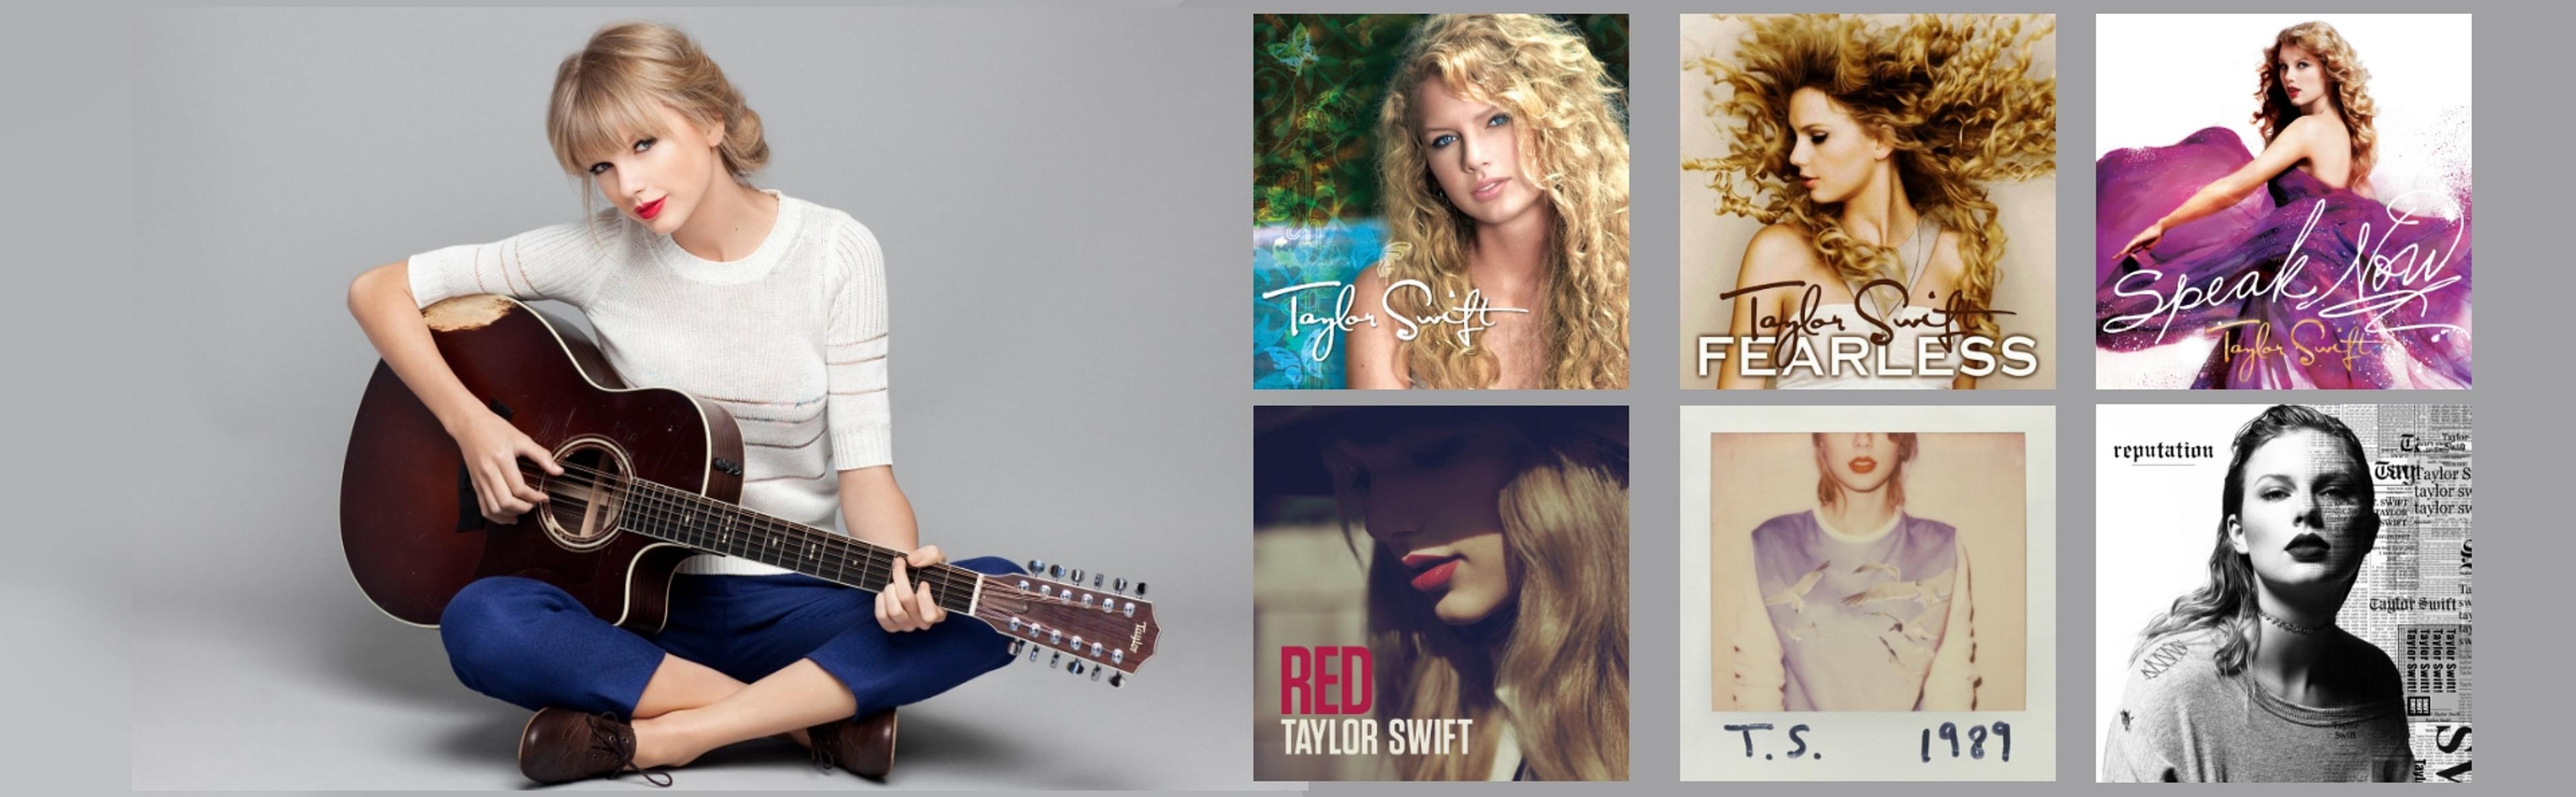 The Evolution of Taylor Swift Album Cover Design - Superside